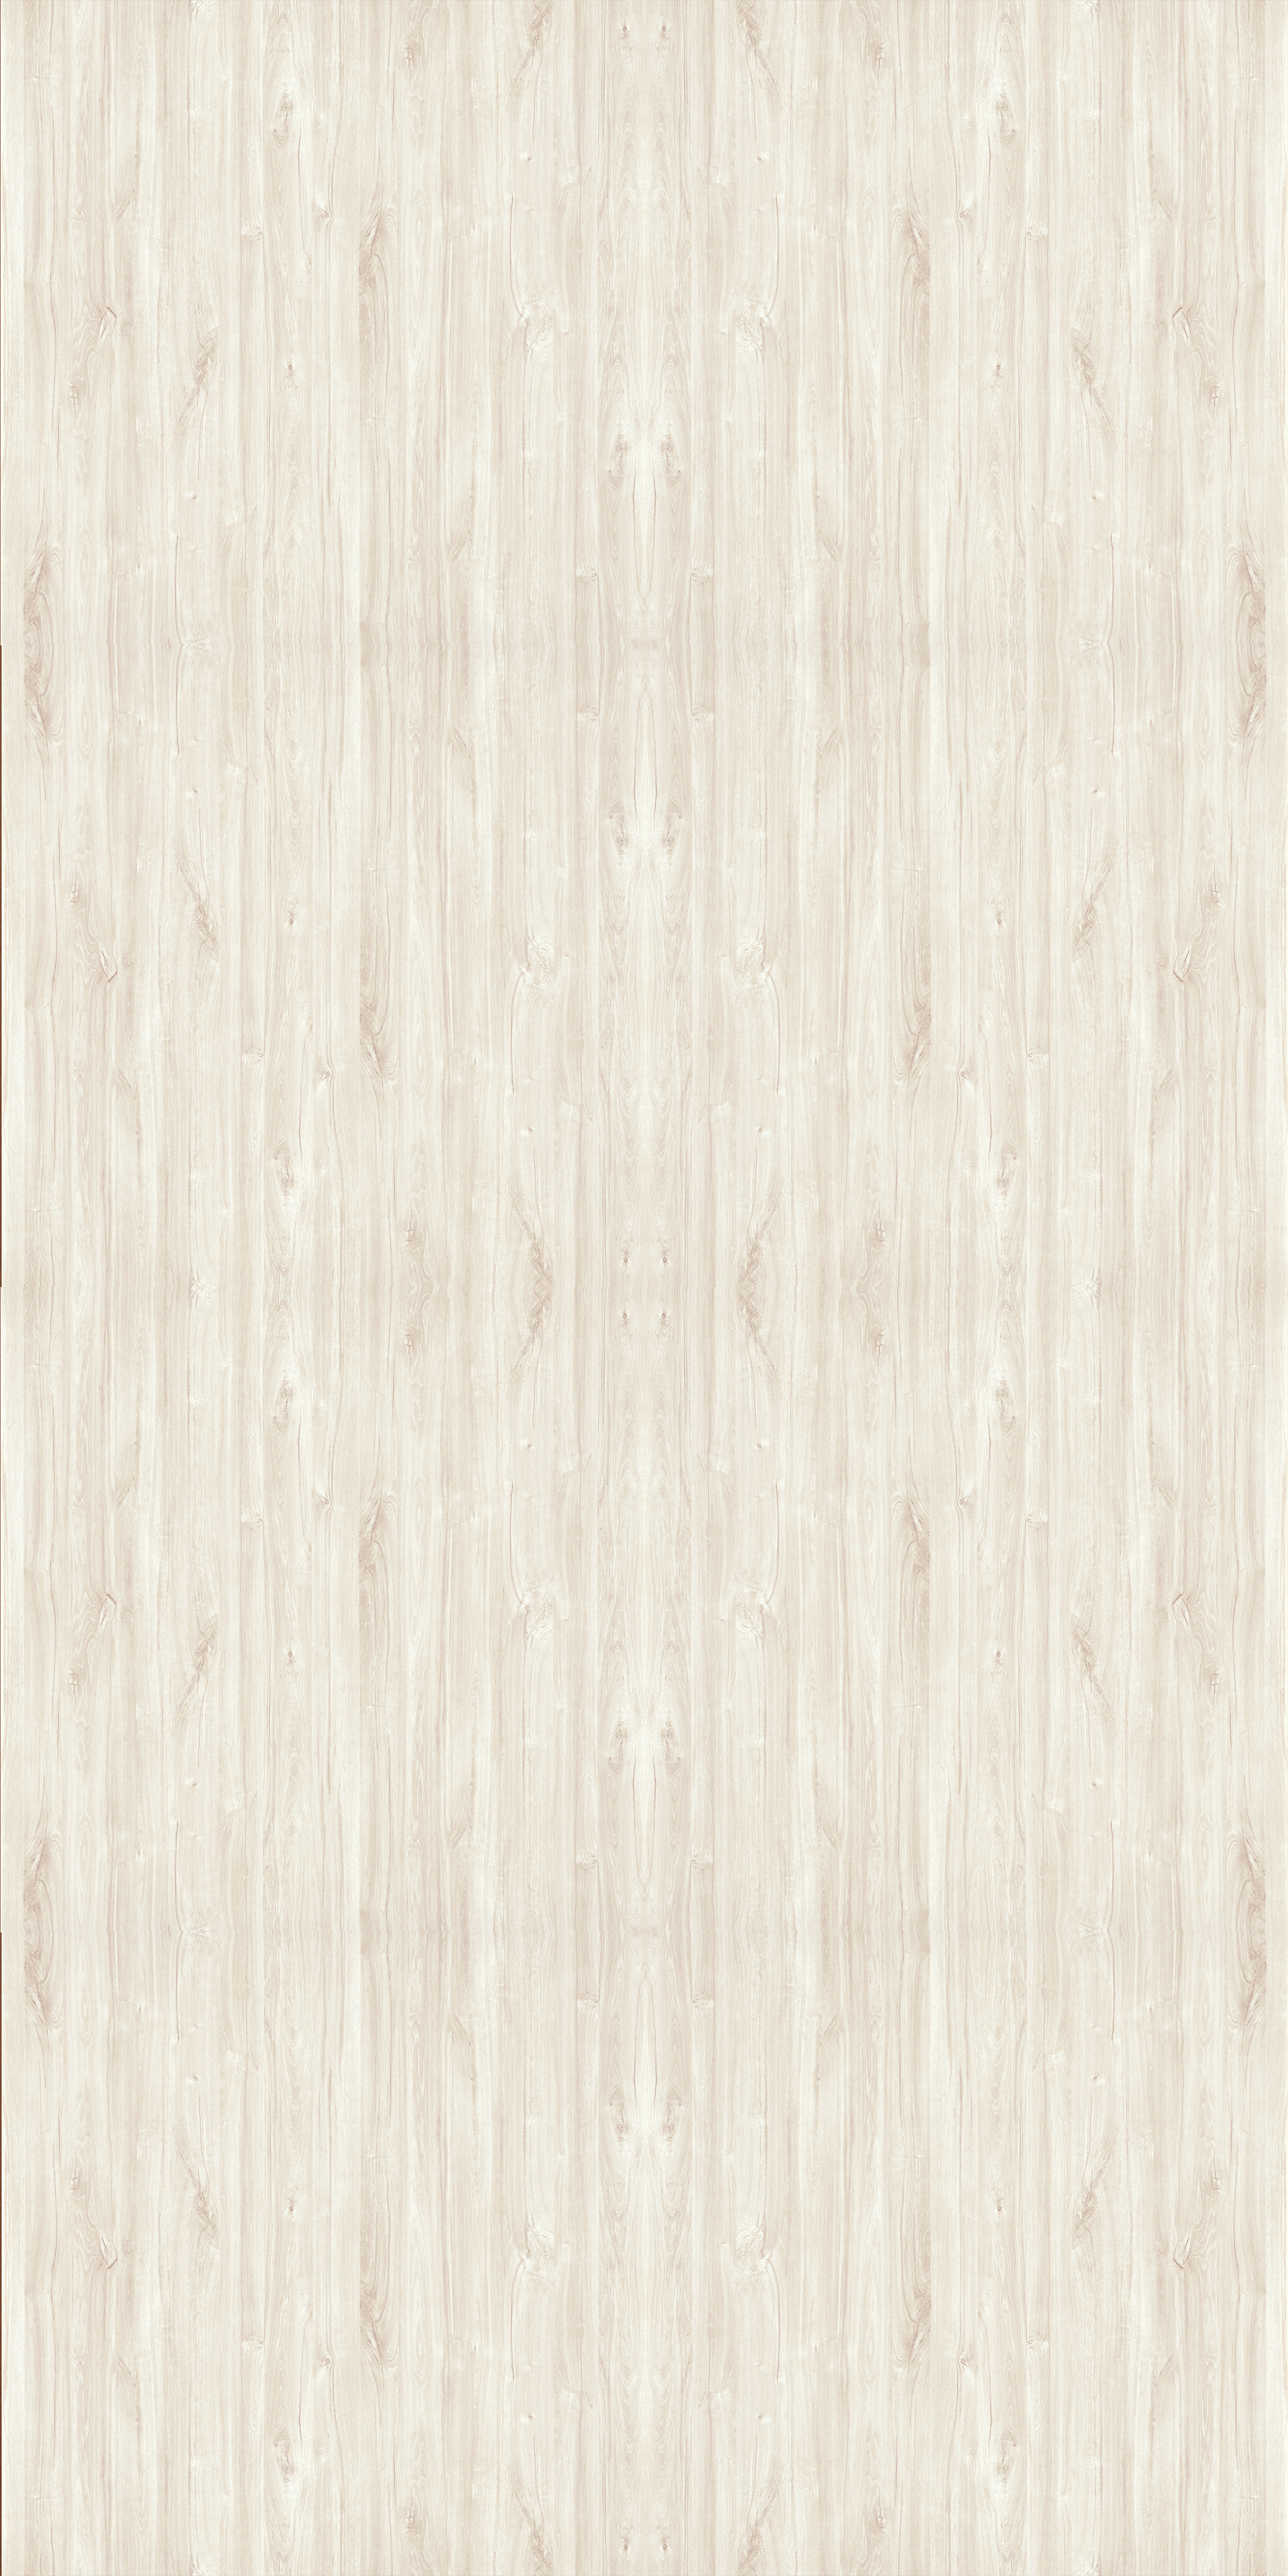 Mica wood paper Wooden Merino Laminate Sheet, Size: 8 X 4 Feet